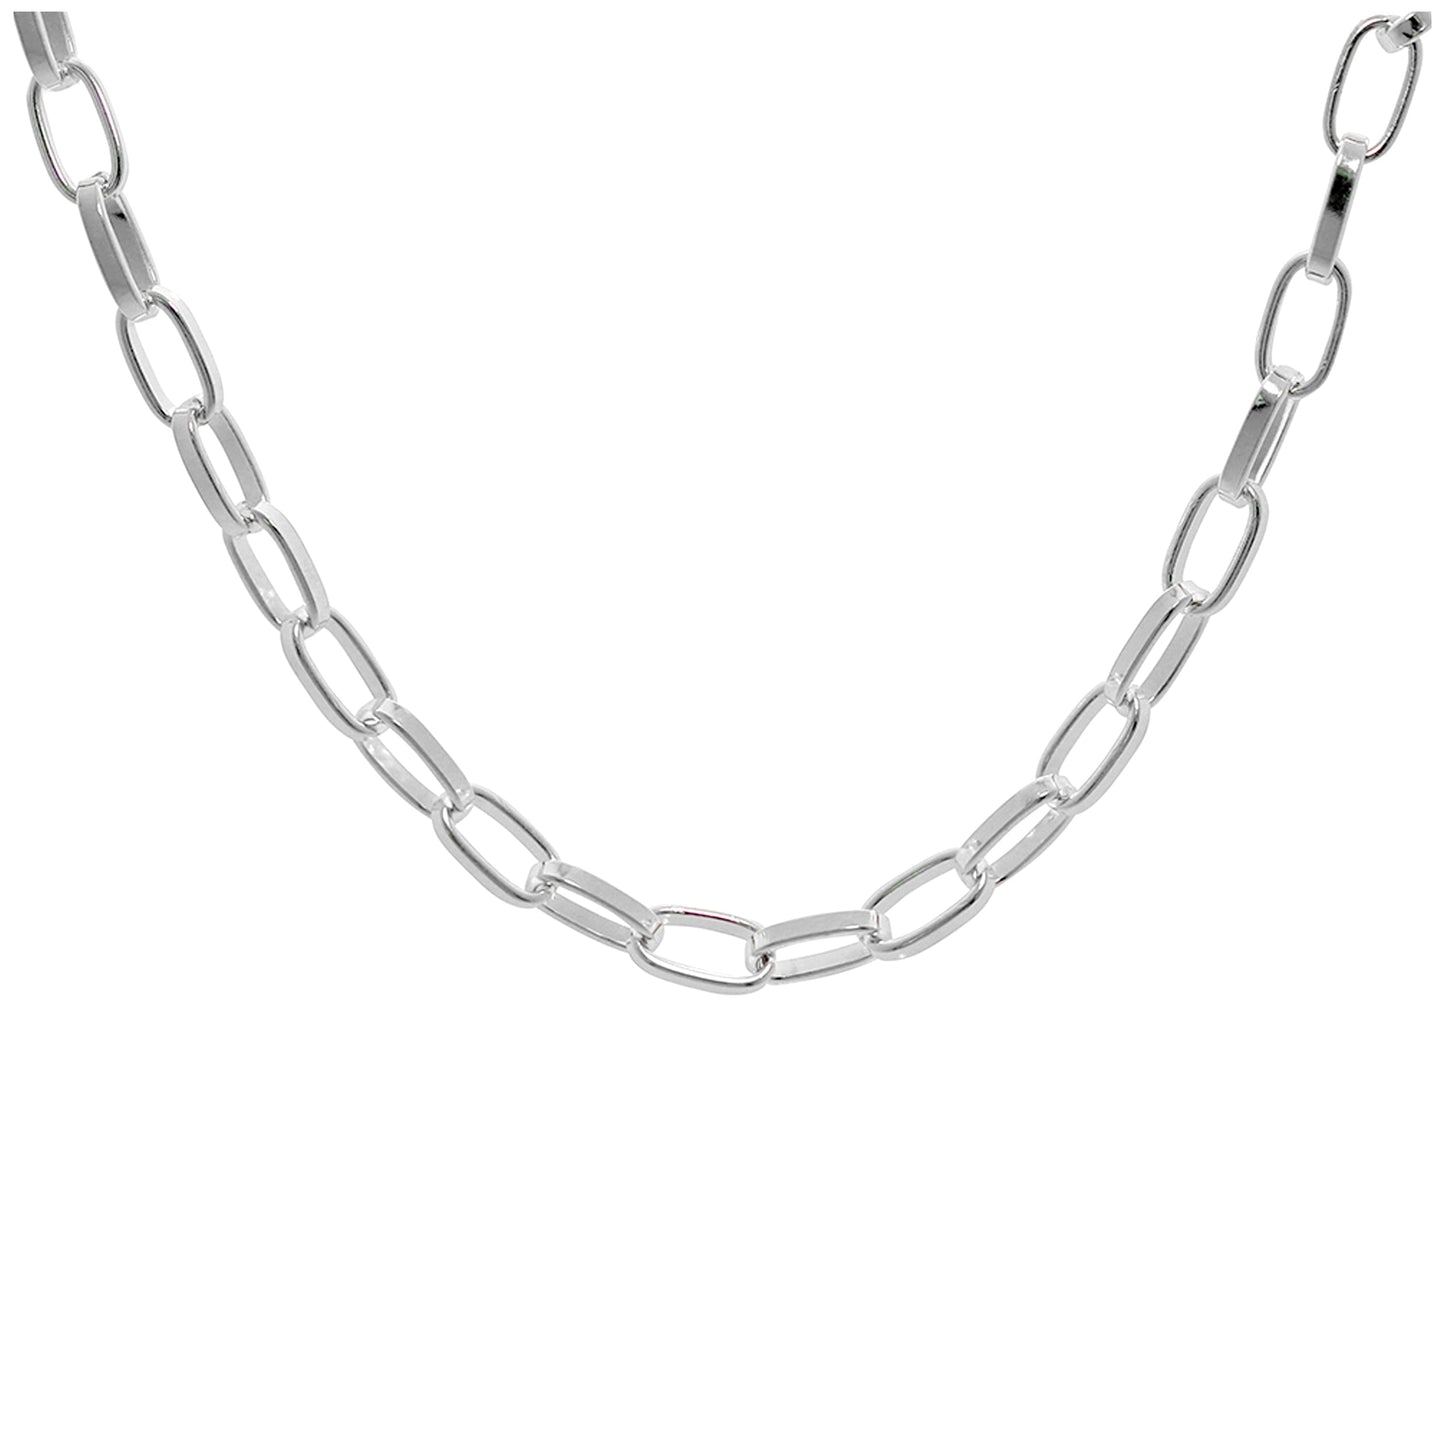 Sterlingsilber Kettenglied Verstellbar Halskette 16 - 45,5cm